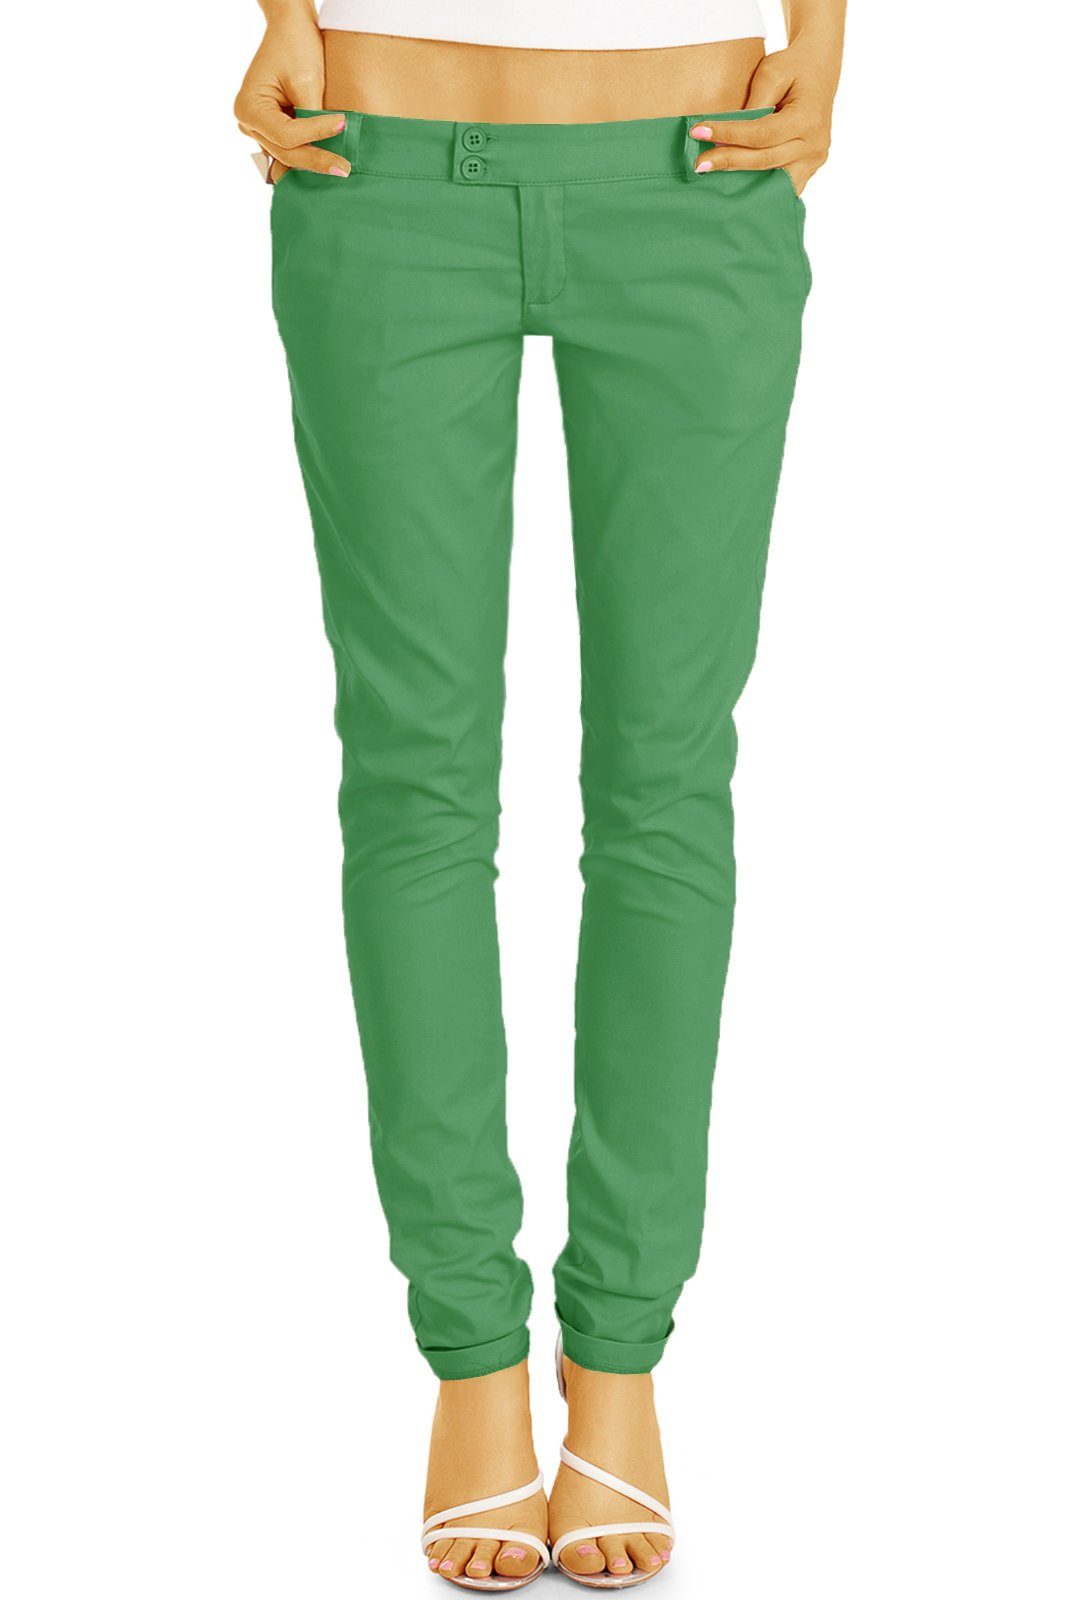 Hüfthosen röhrige Stoffhose slim fit sportlich Damenhosen, elegant styled / grün be h15a